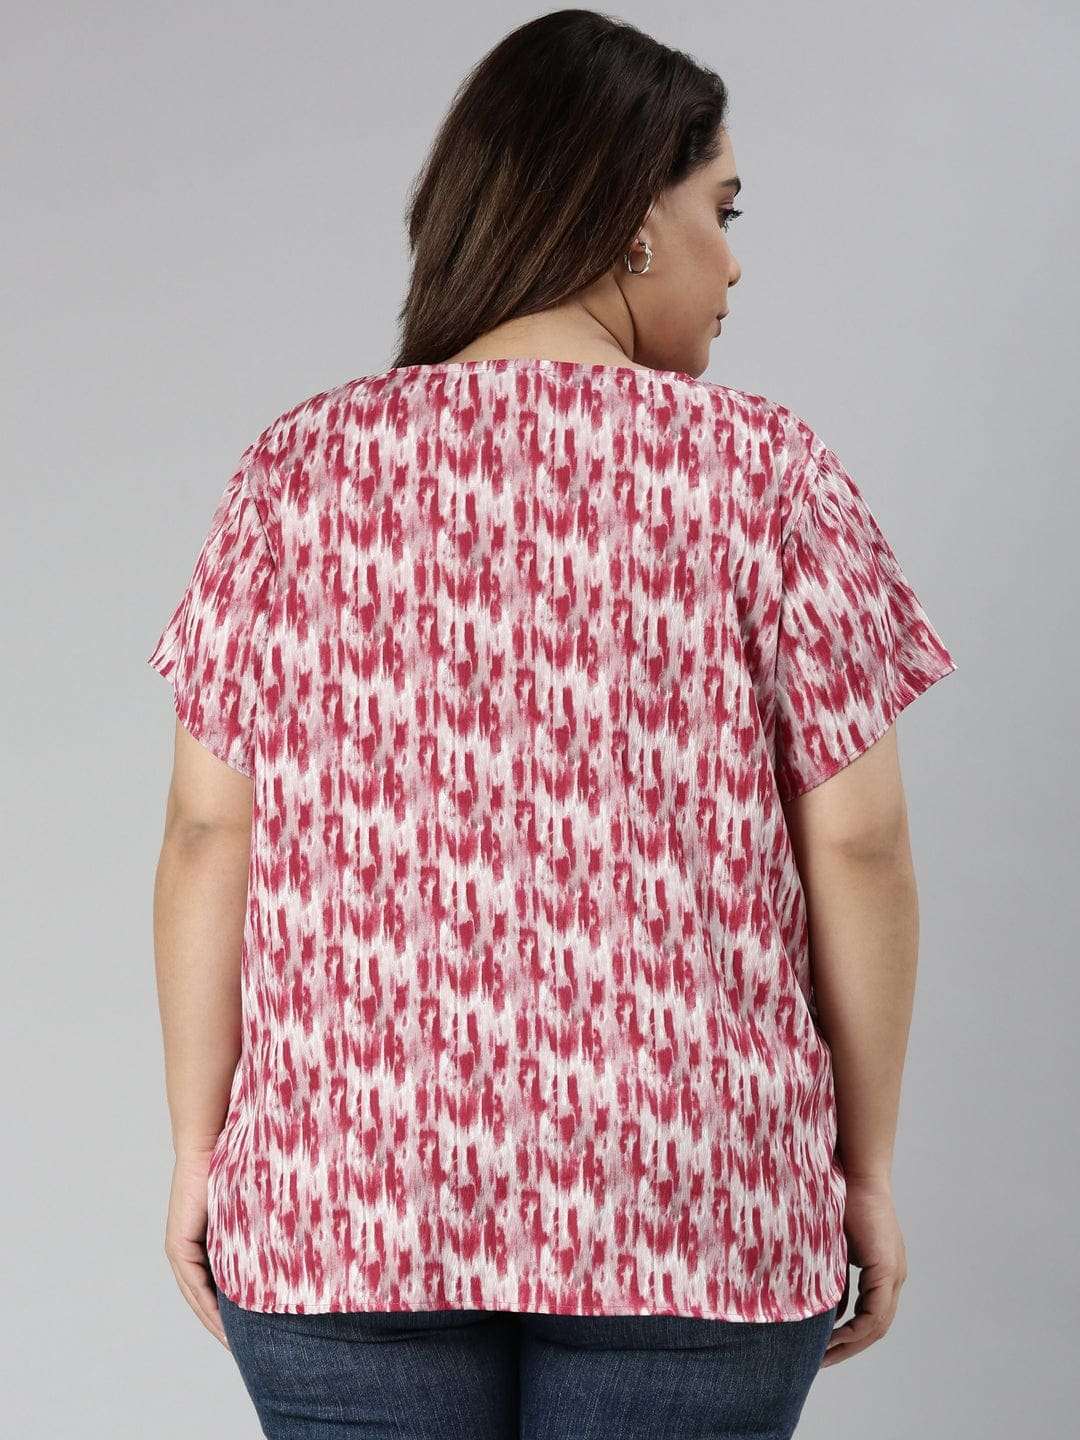 TheShaili - Women's Red Crinkled V neck regular A-line top